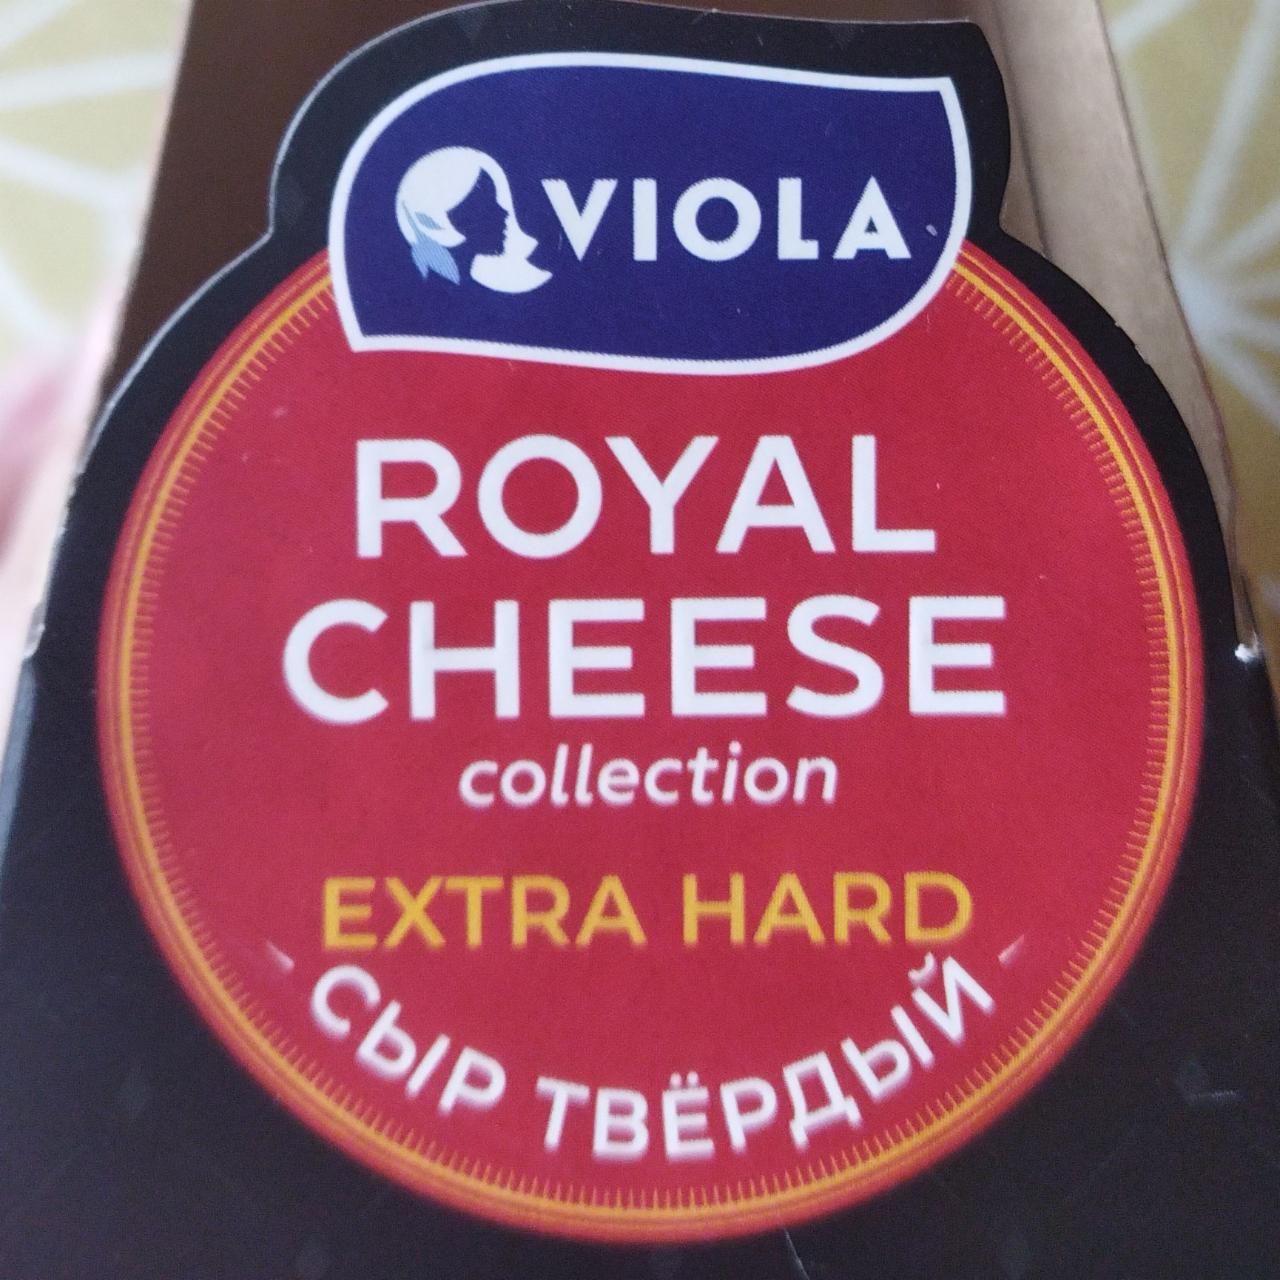 Фото - Сыр твёрдый Royal Cheese collection Extra hard Viola